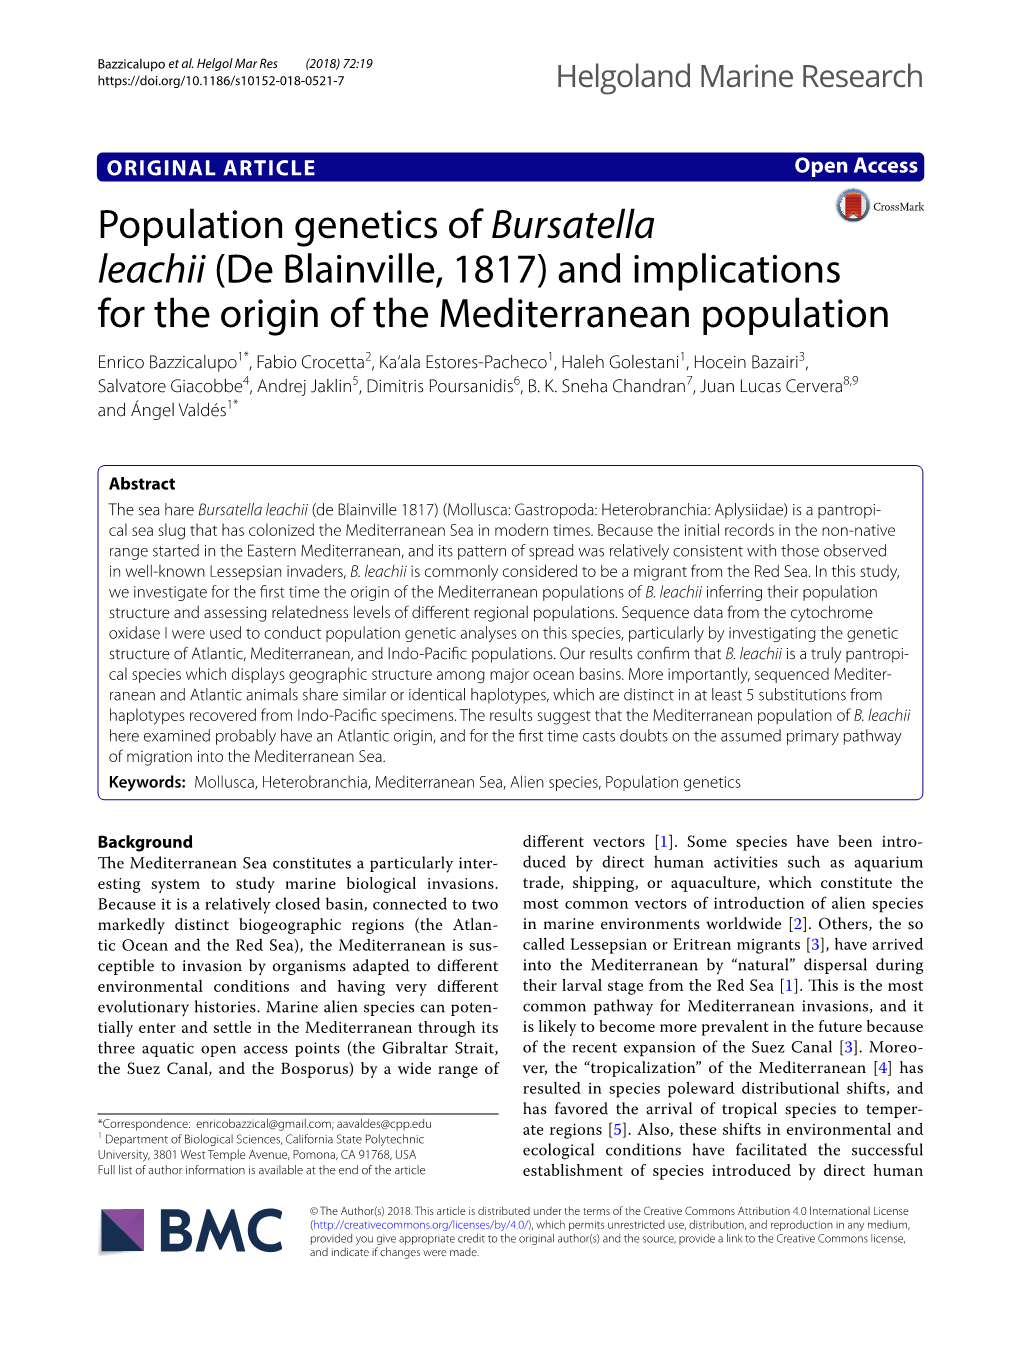 Population Genetics of Bursatella Leachii (De Blainville, 1817)